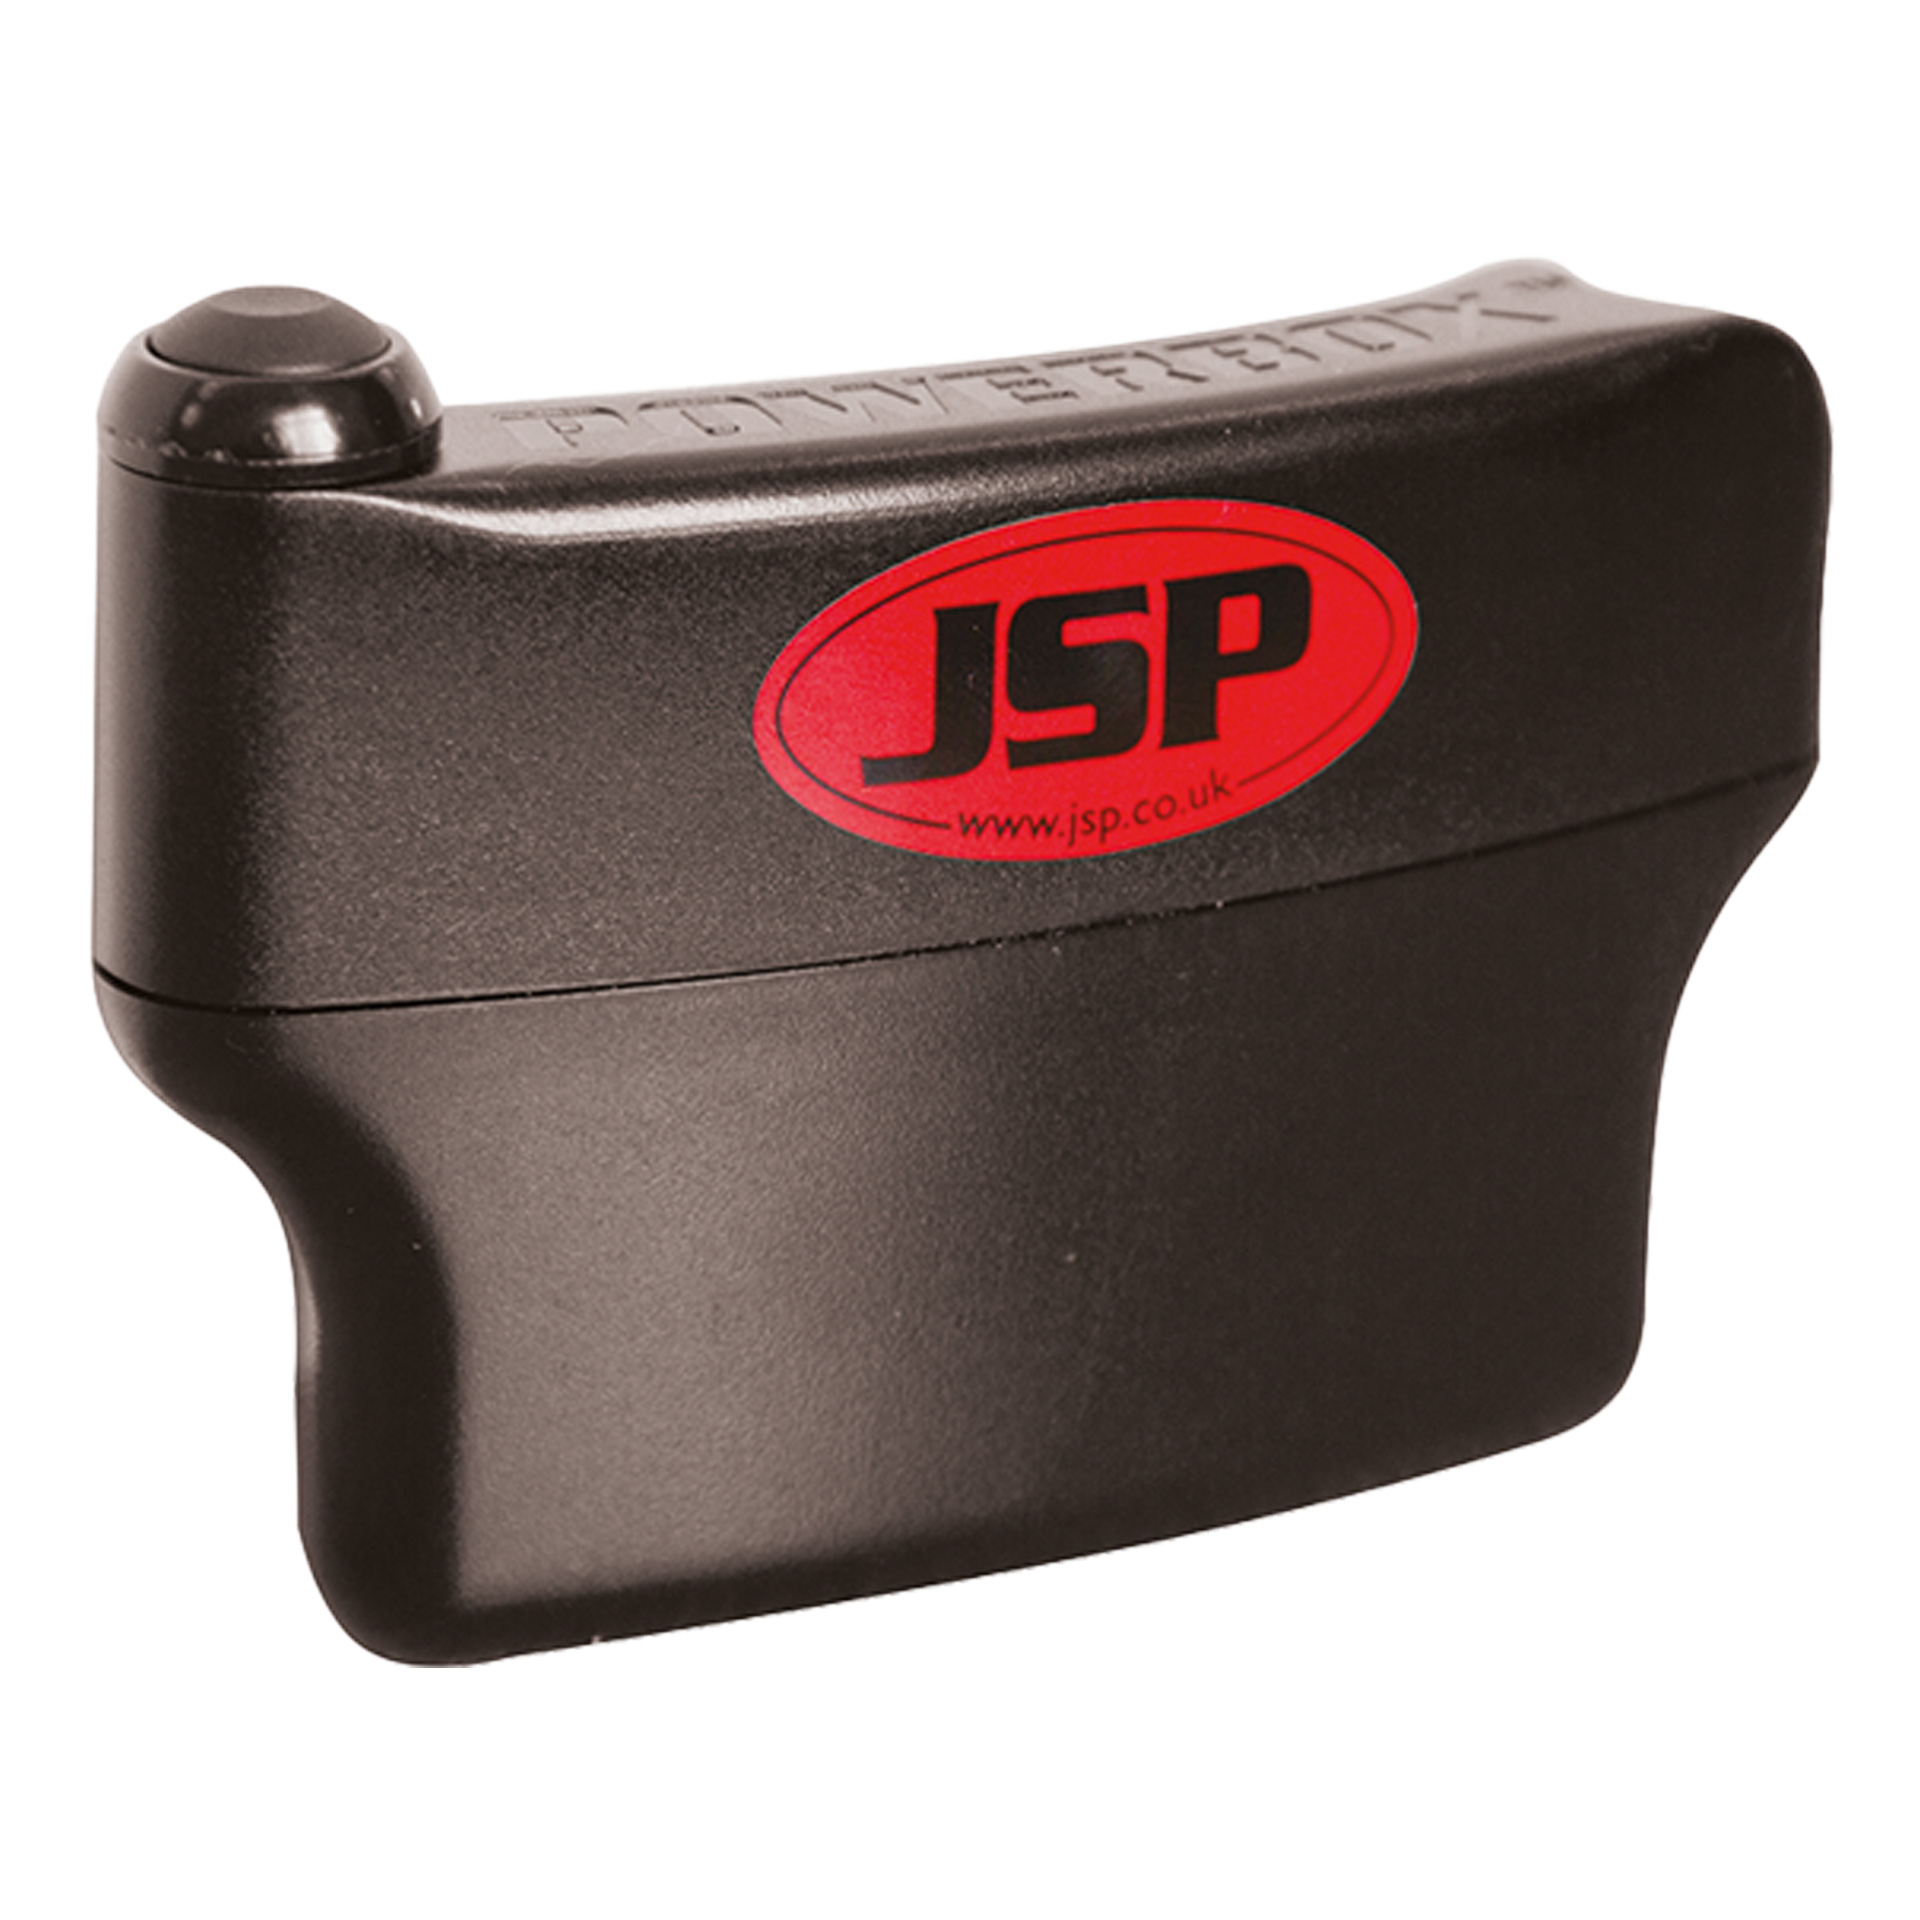 JSP POWERCAP® ACTIVE IP 8HR